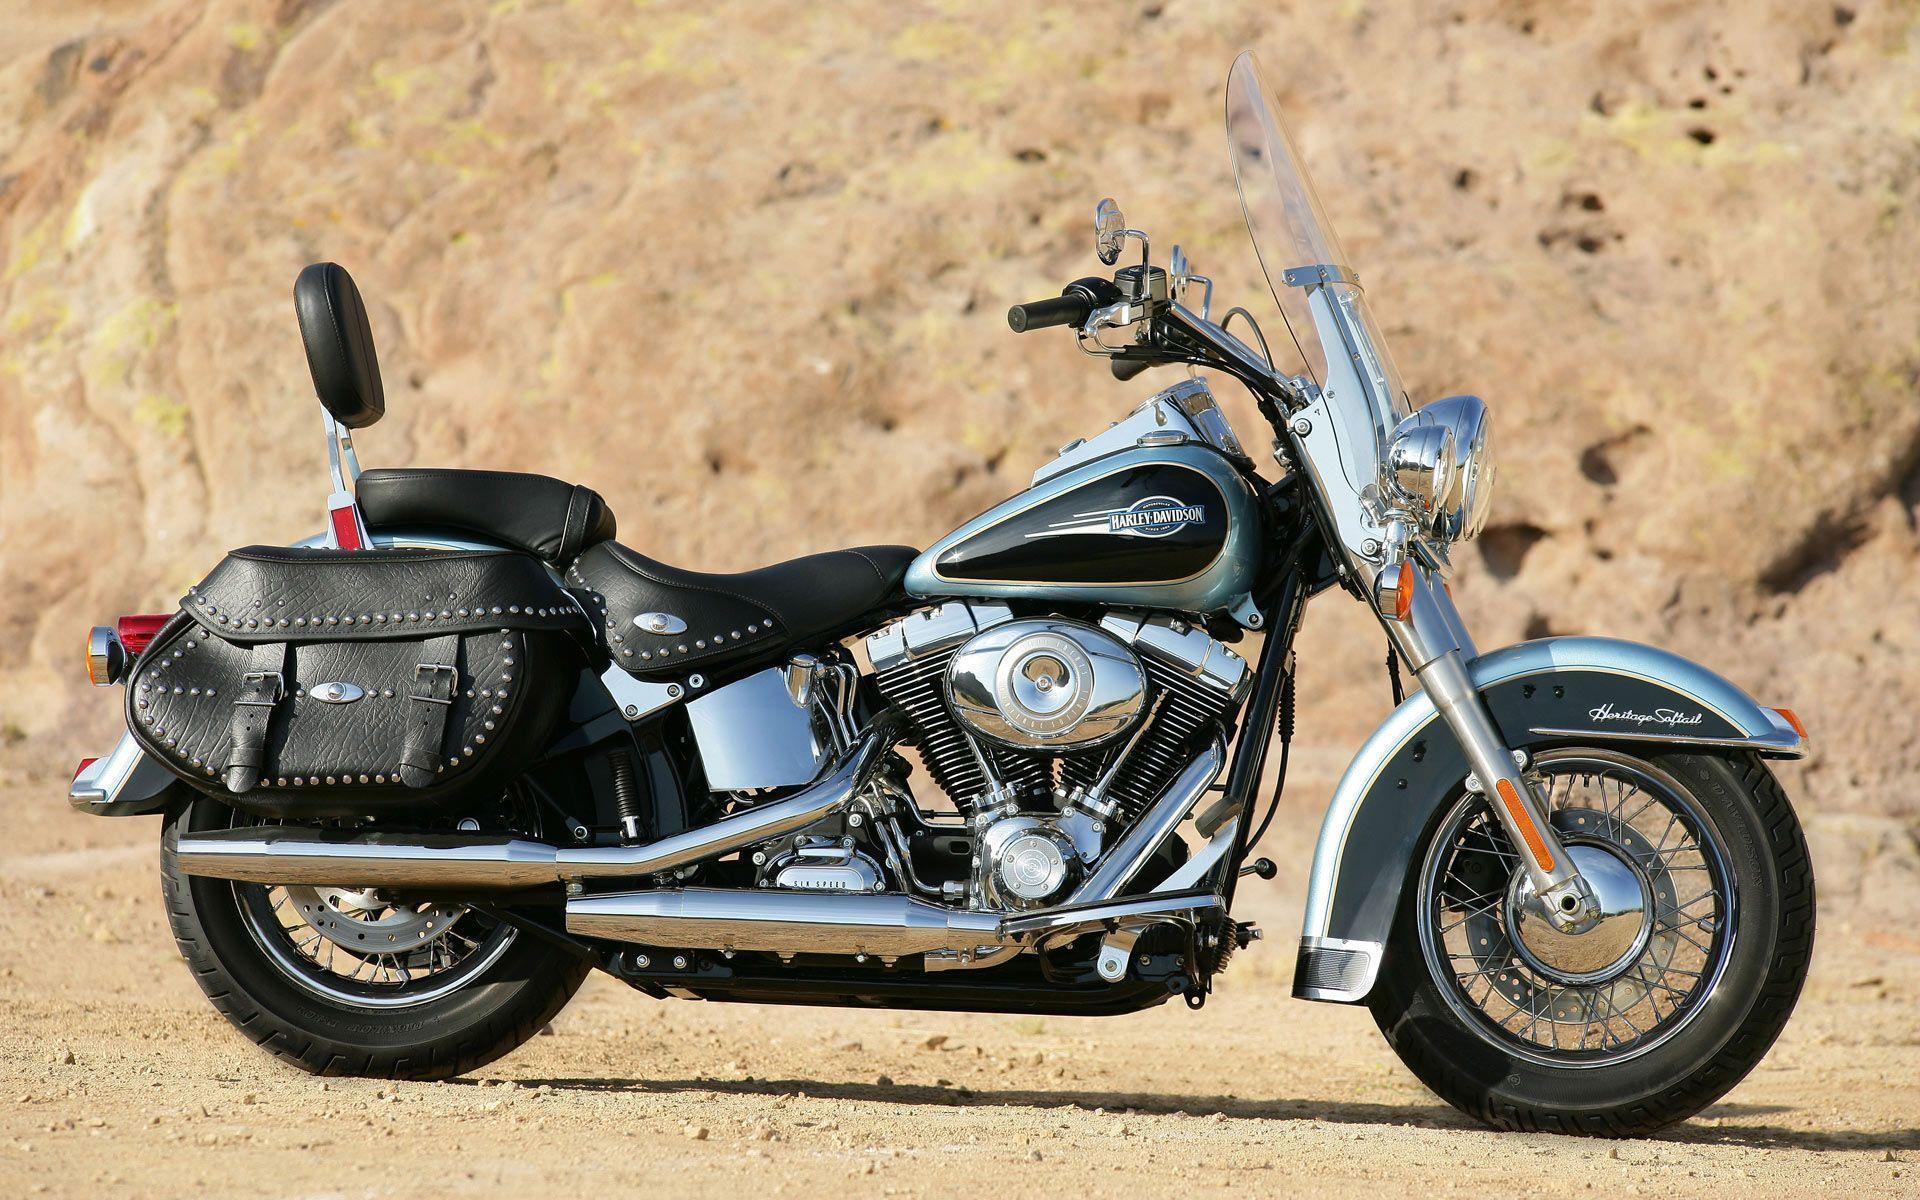 Harley Davidson Motorcycle Wallpaper Full HD 12131 Full HD